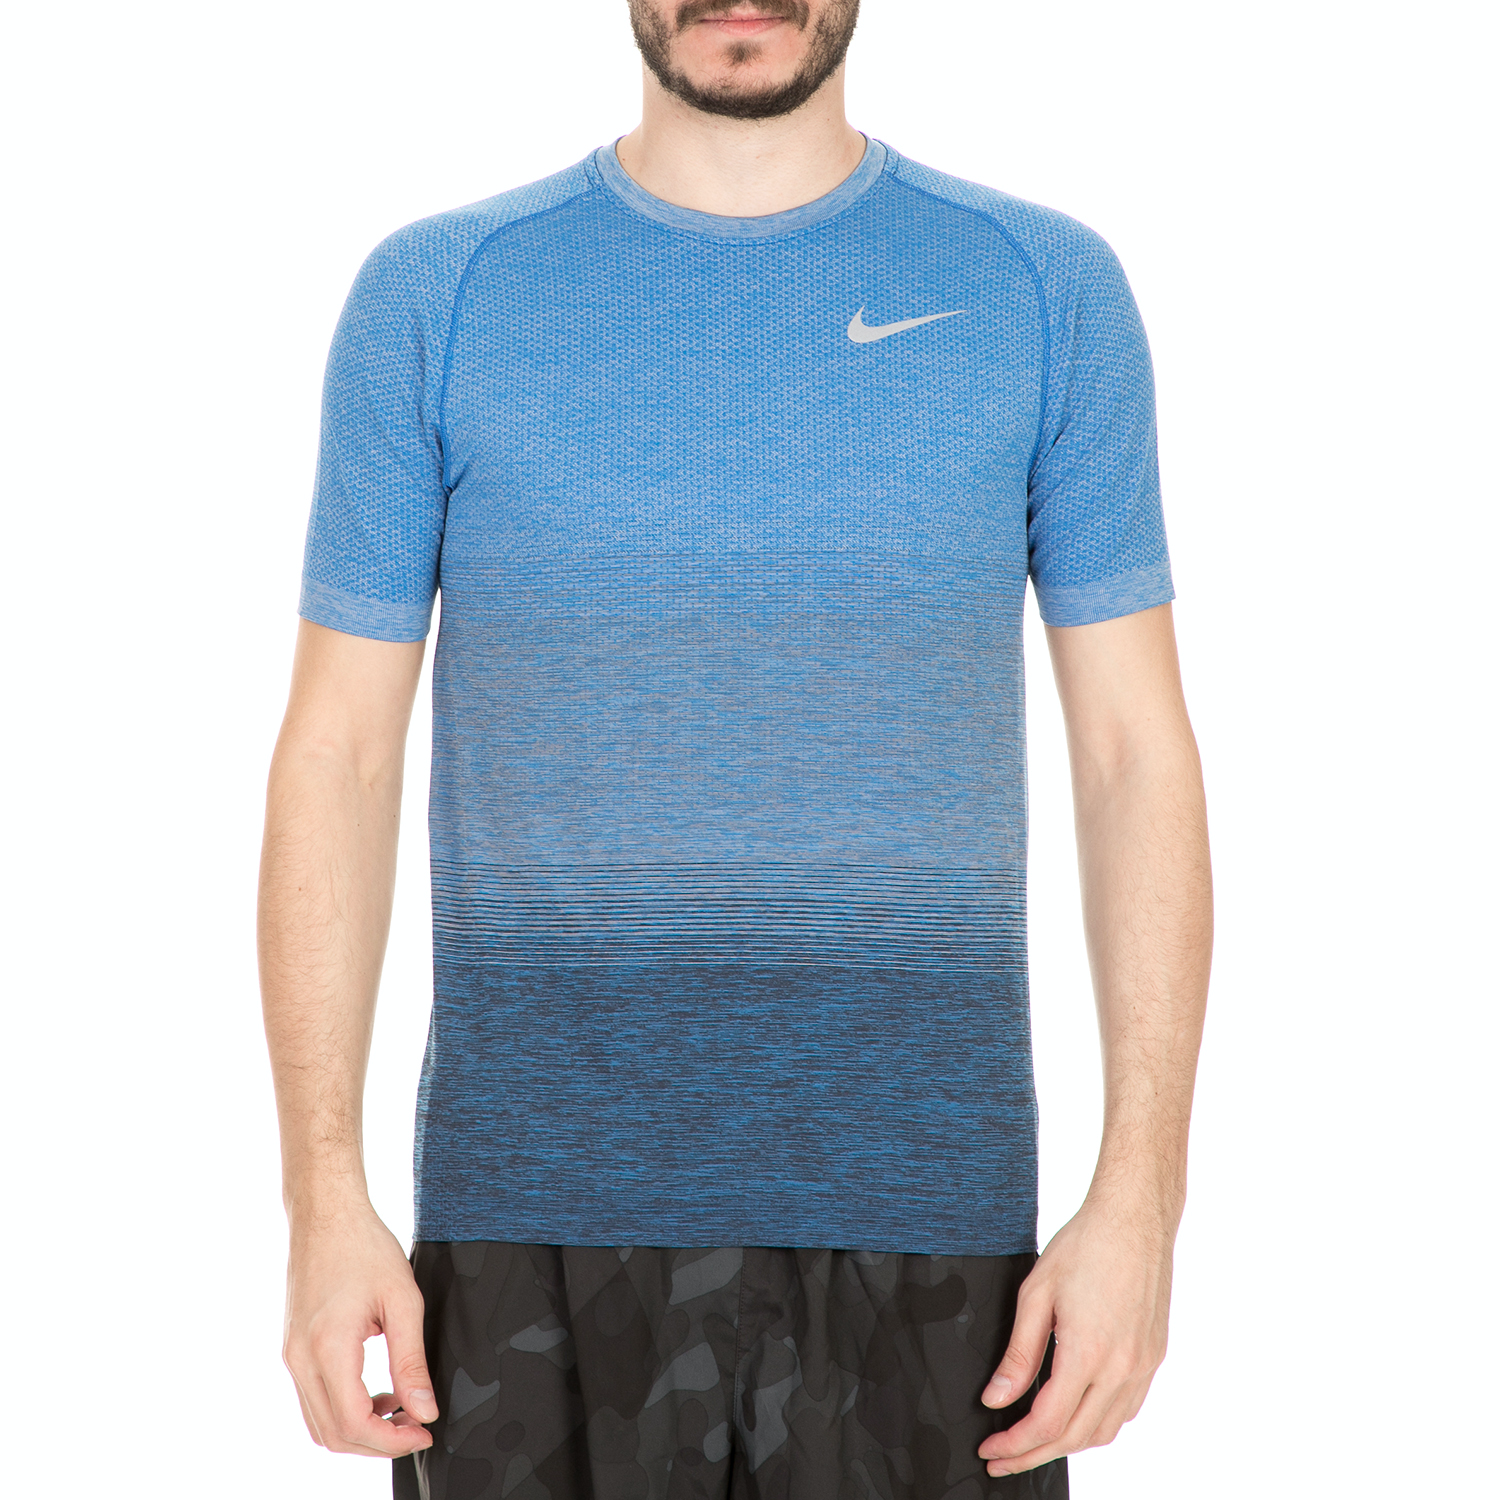 NIKE - Ανδρική αθλητική κοντομάνικη μπλούζα NIKE DF KNIT γαλάζιο Ανδρικά/Ρούχα/Αθλητικά/T-shirt